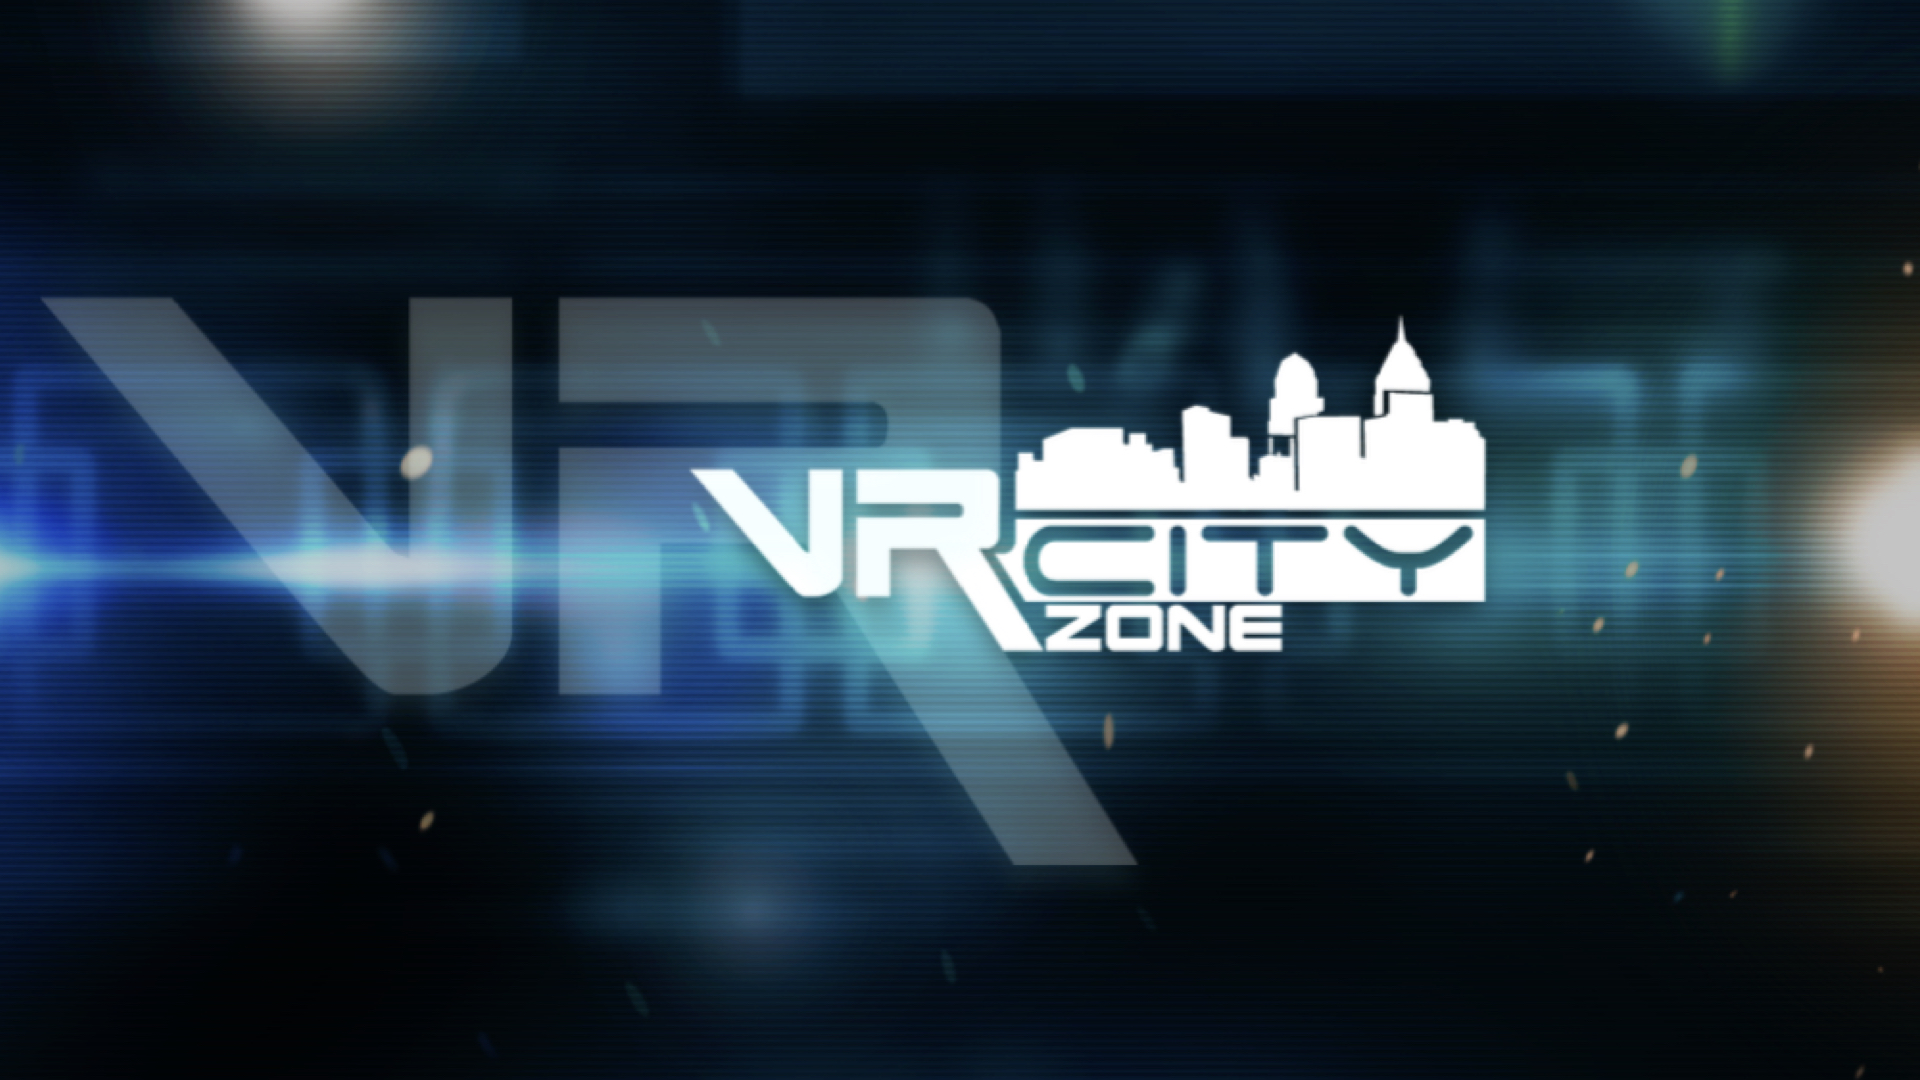 Vr city zone graphic